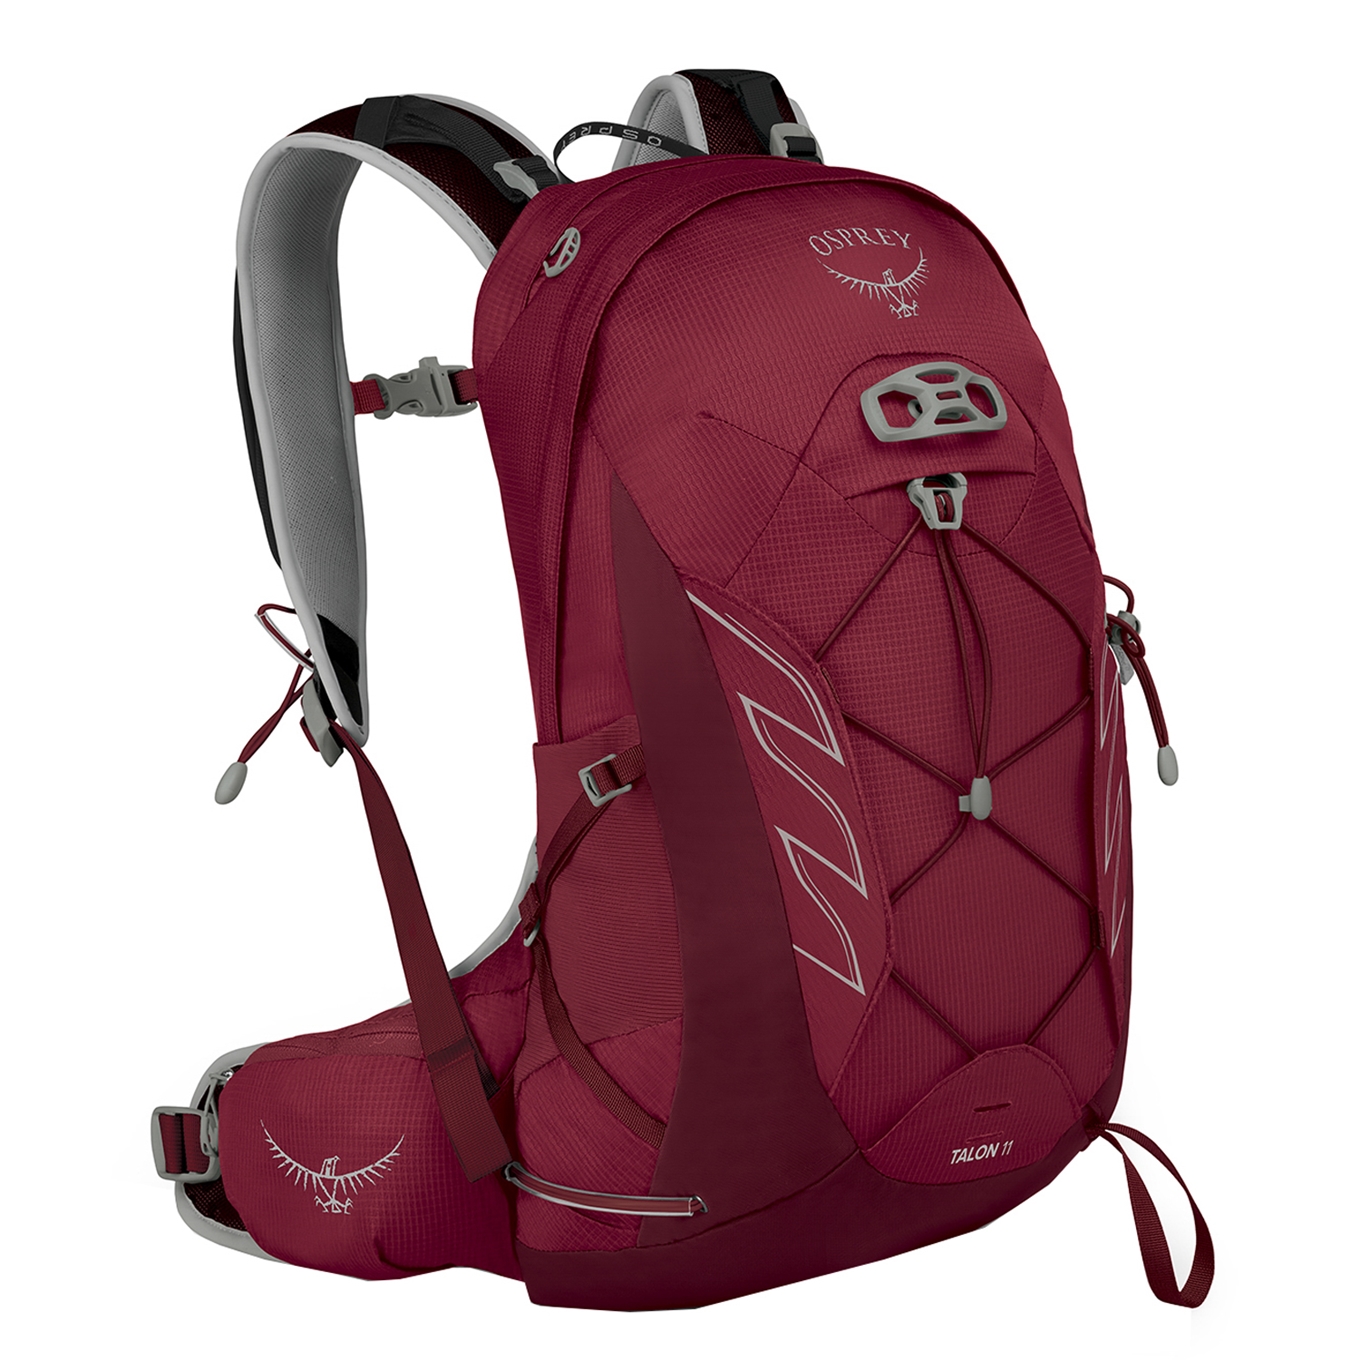 Osprey Talon 11 Backpack L/XL cosmic red backpack